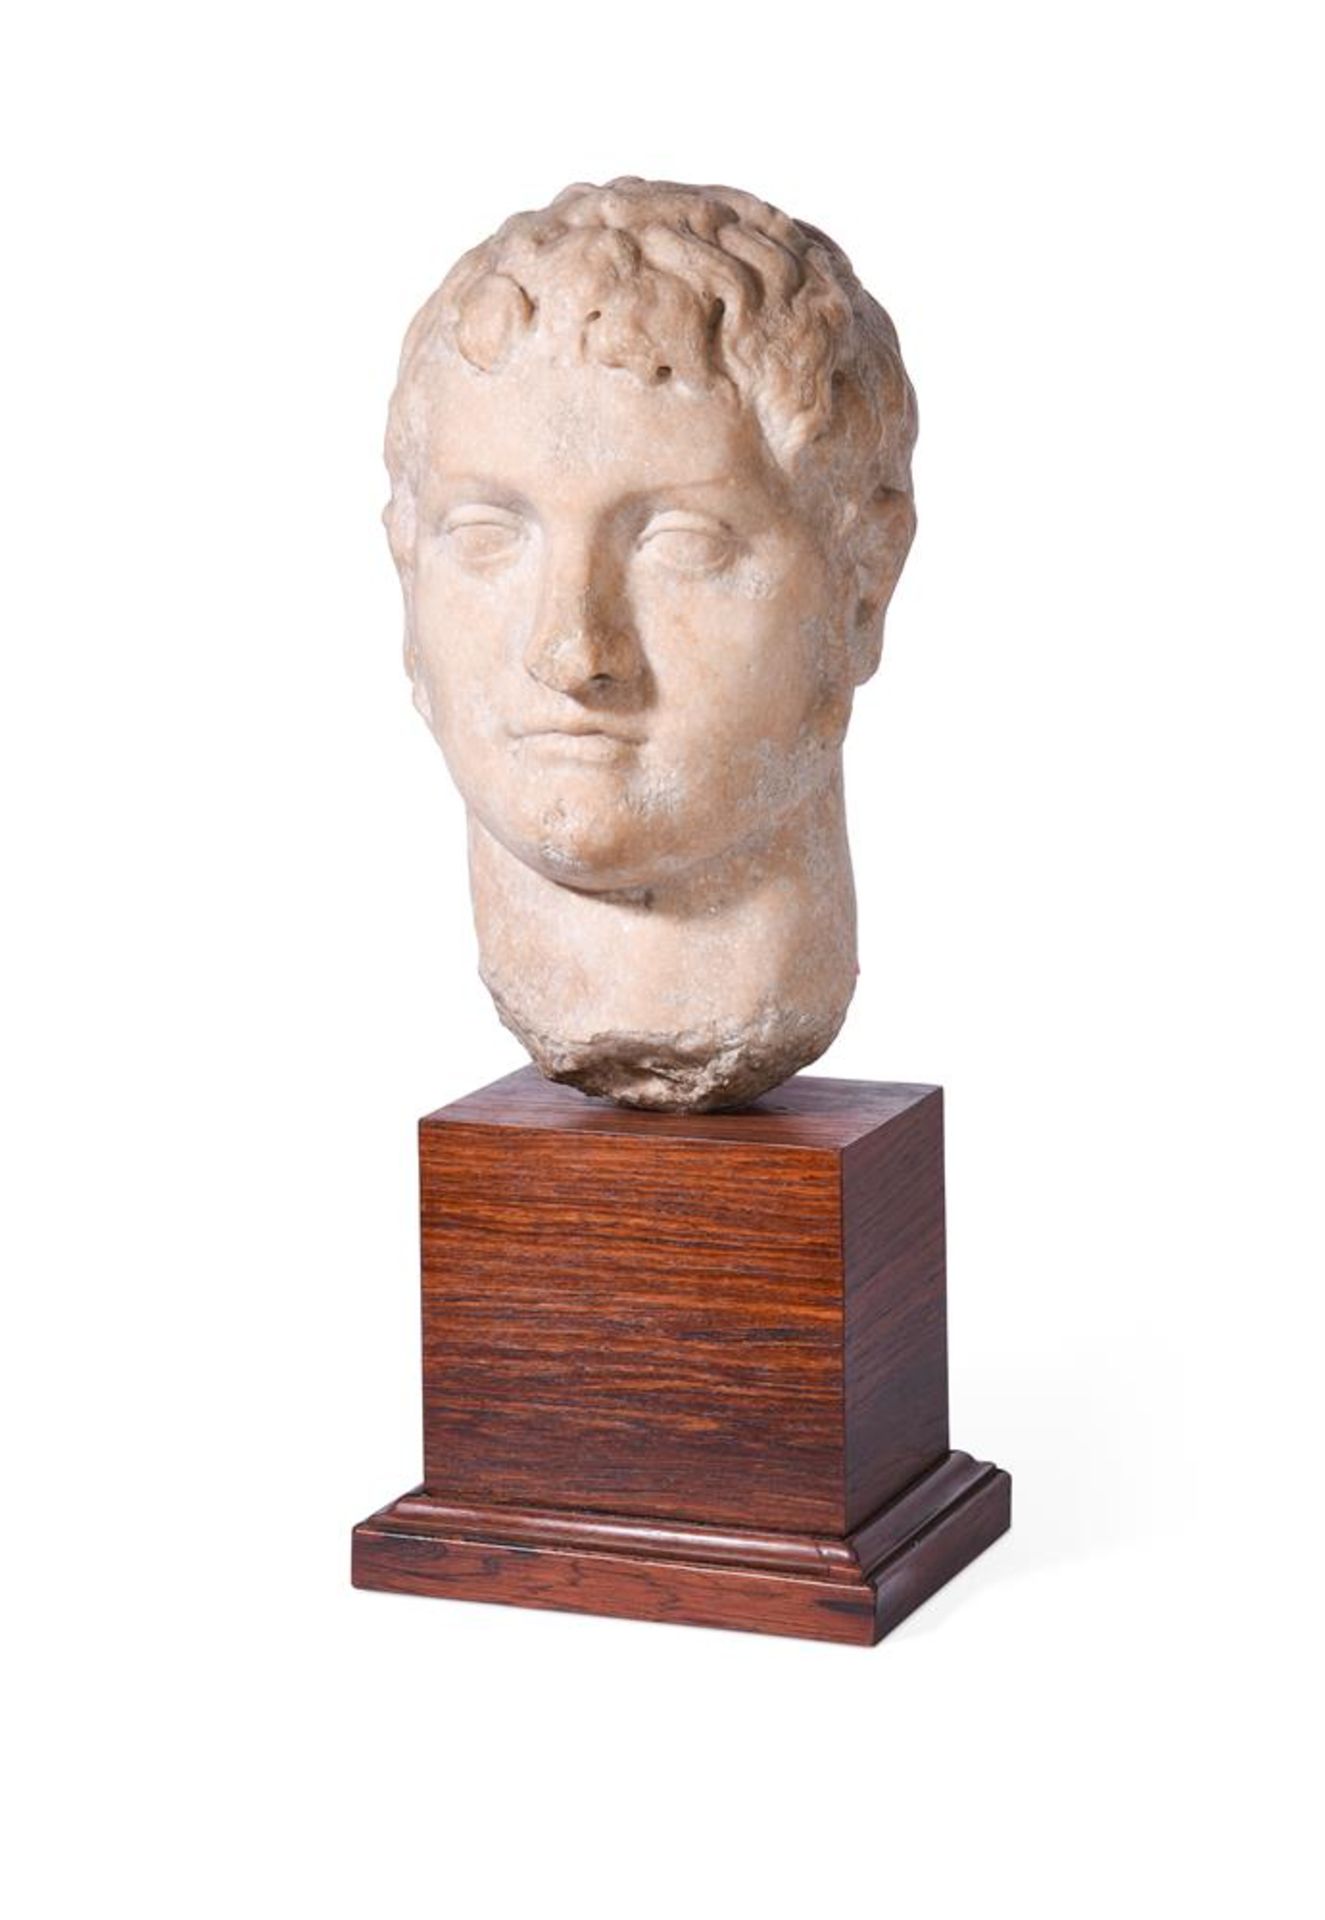 A ROMAN JULIO-CLAUDIAN MARBLE PORTRAIT HEAD OF A MAN, CIRCA 1ST CENTURY A.D.